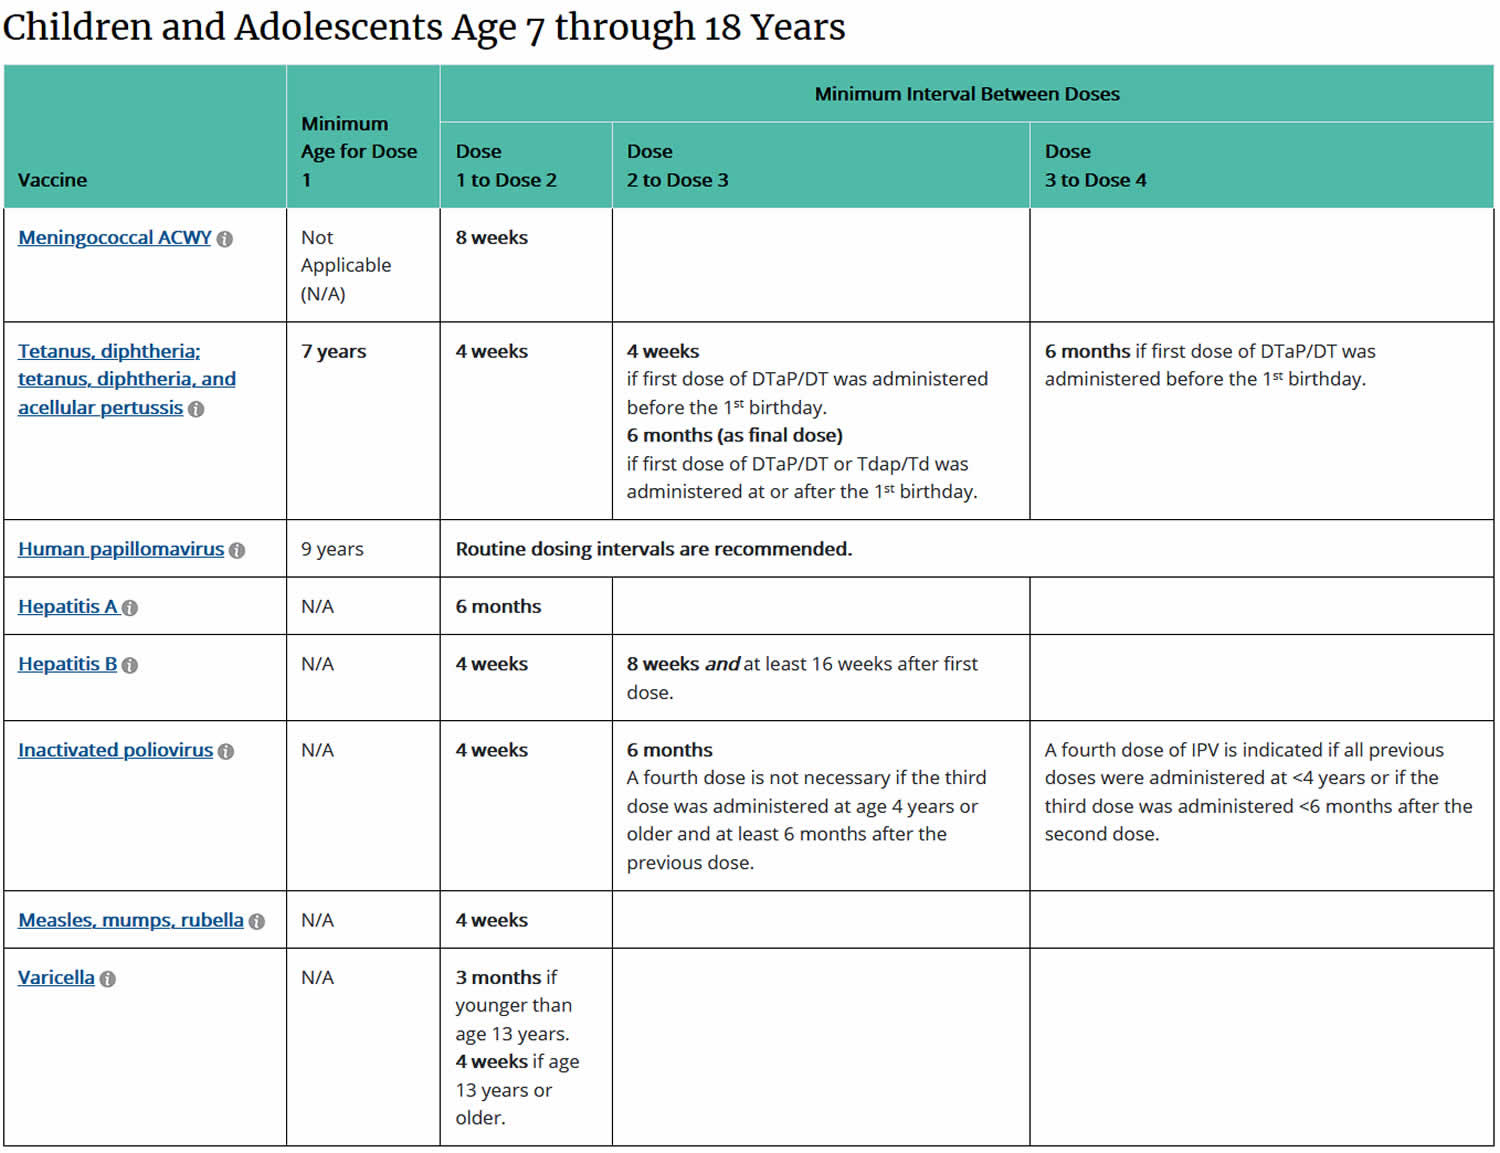 Catch-up immunization schedule for children and adolescents age 7 through 18 years